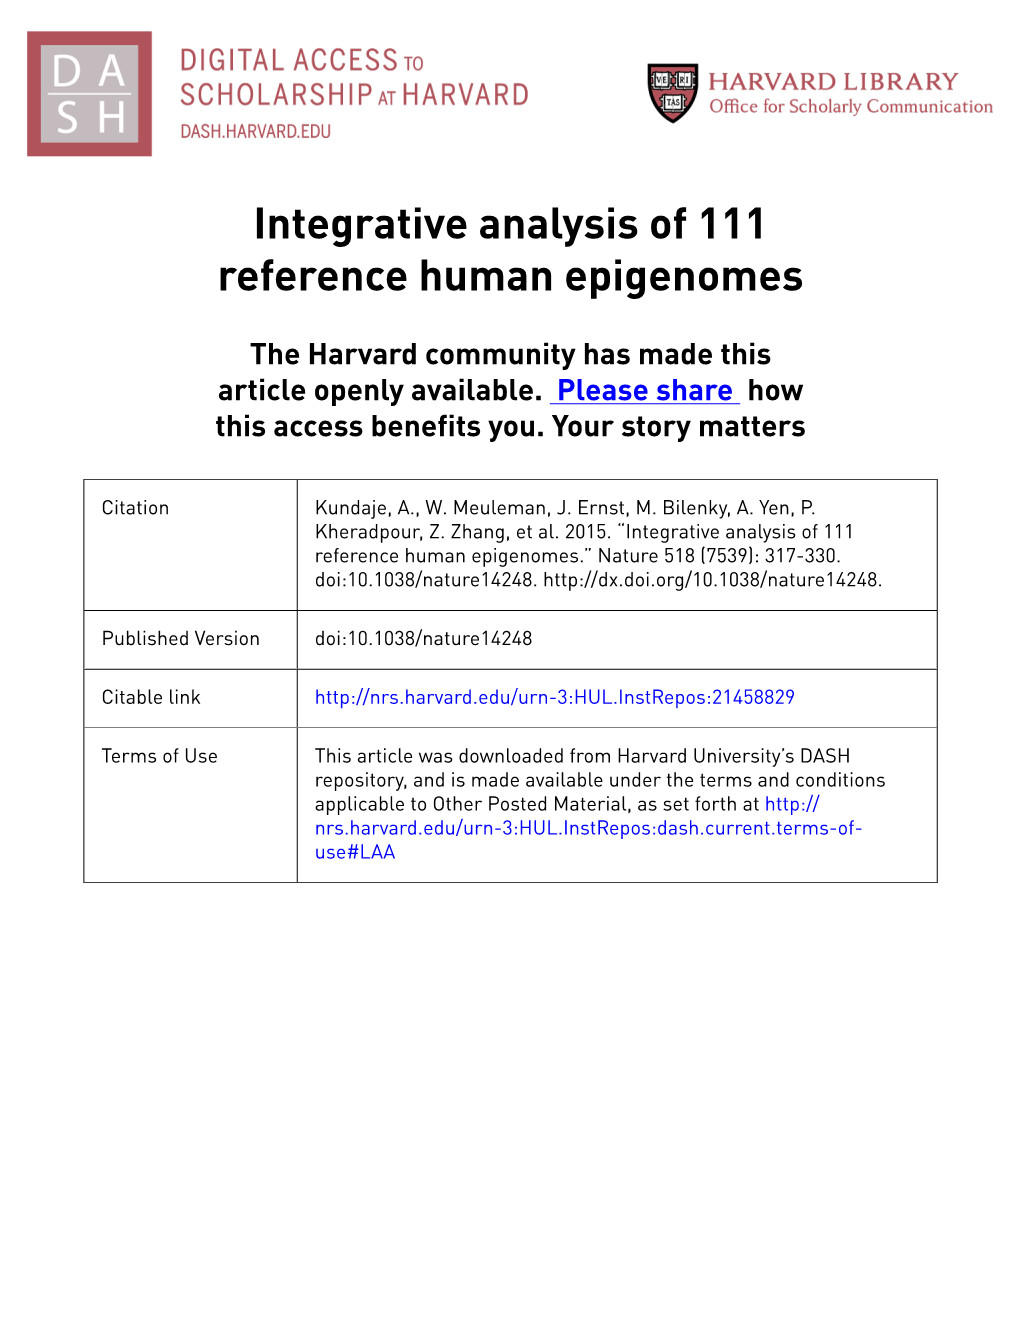 Integrative Analysis of 111 Reference Human Epigenomes